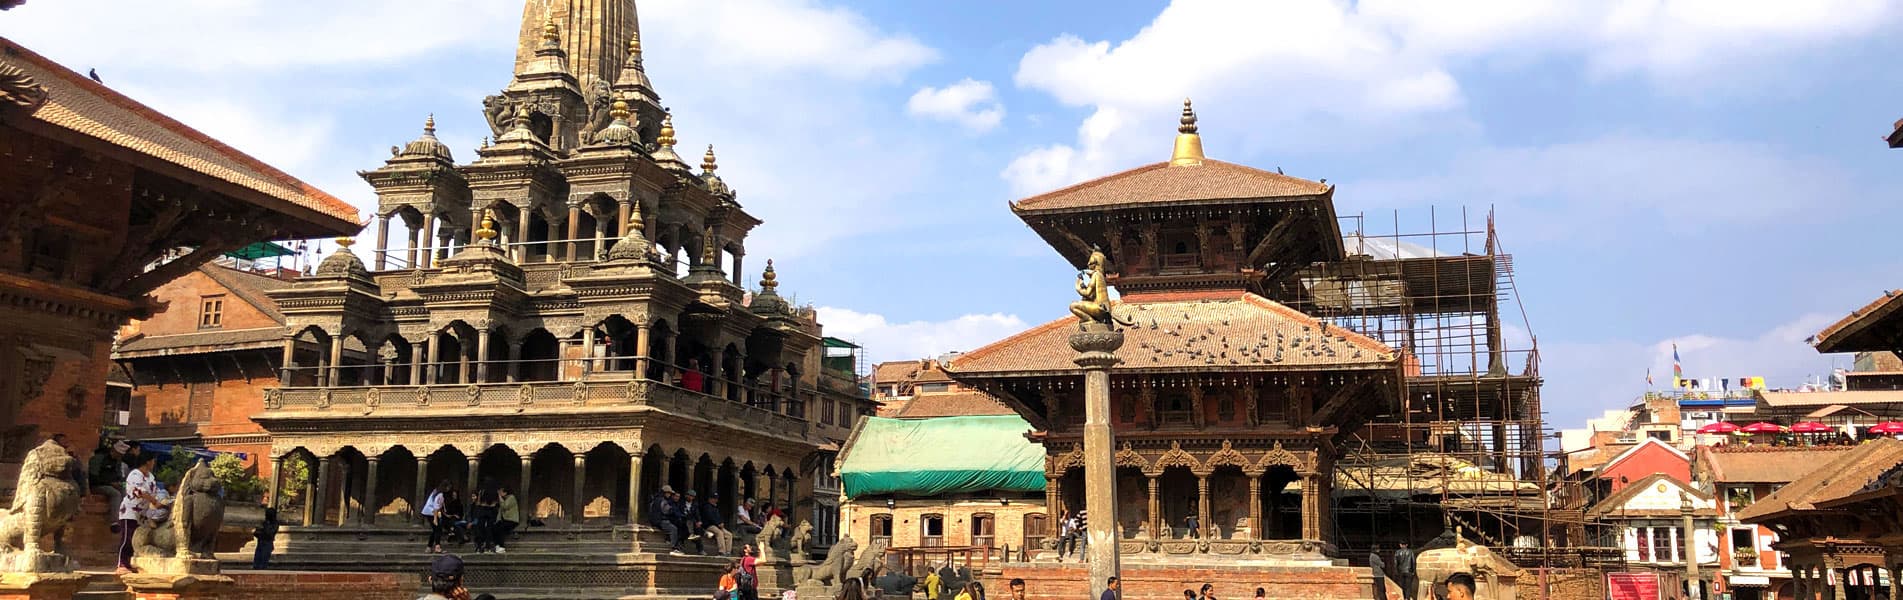 Durbar Square in Nepal